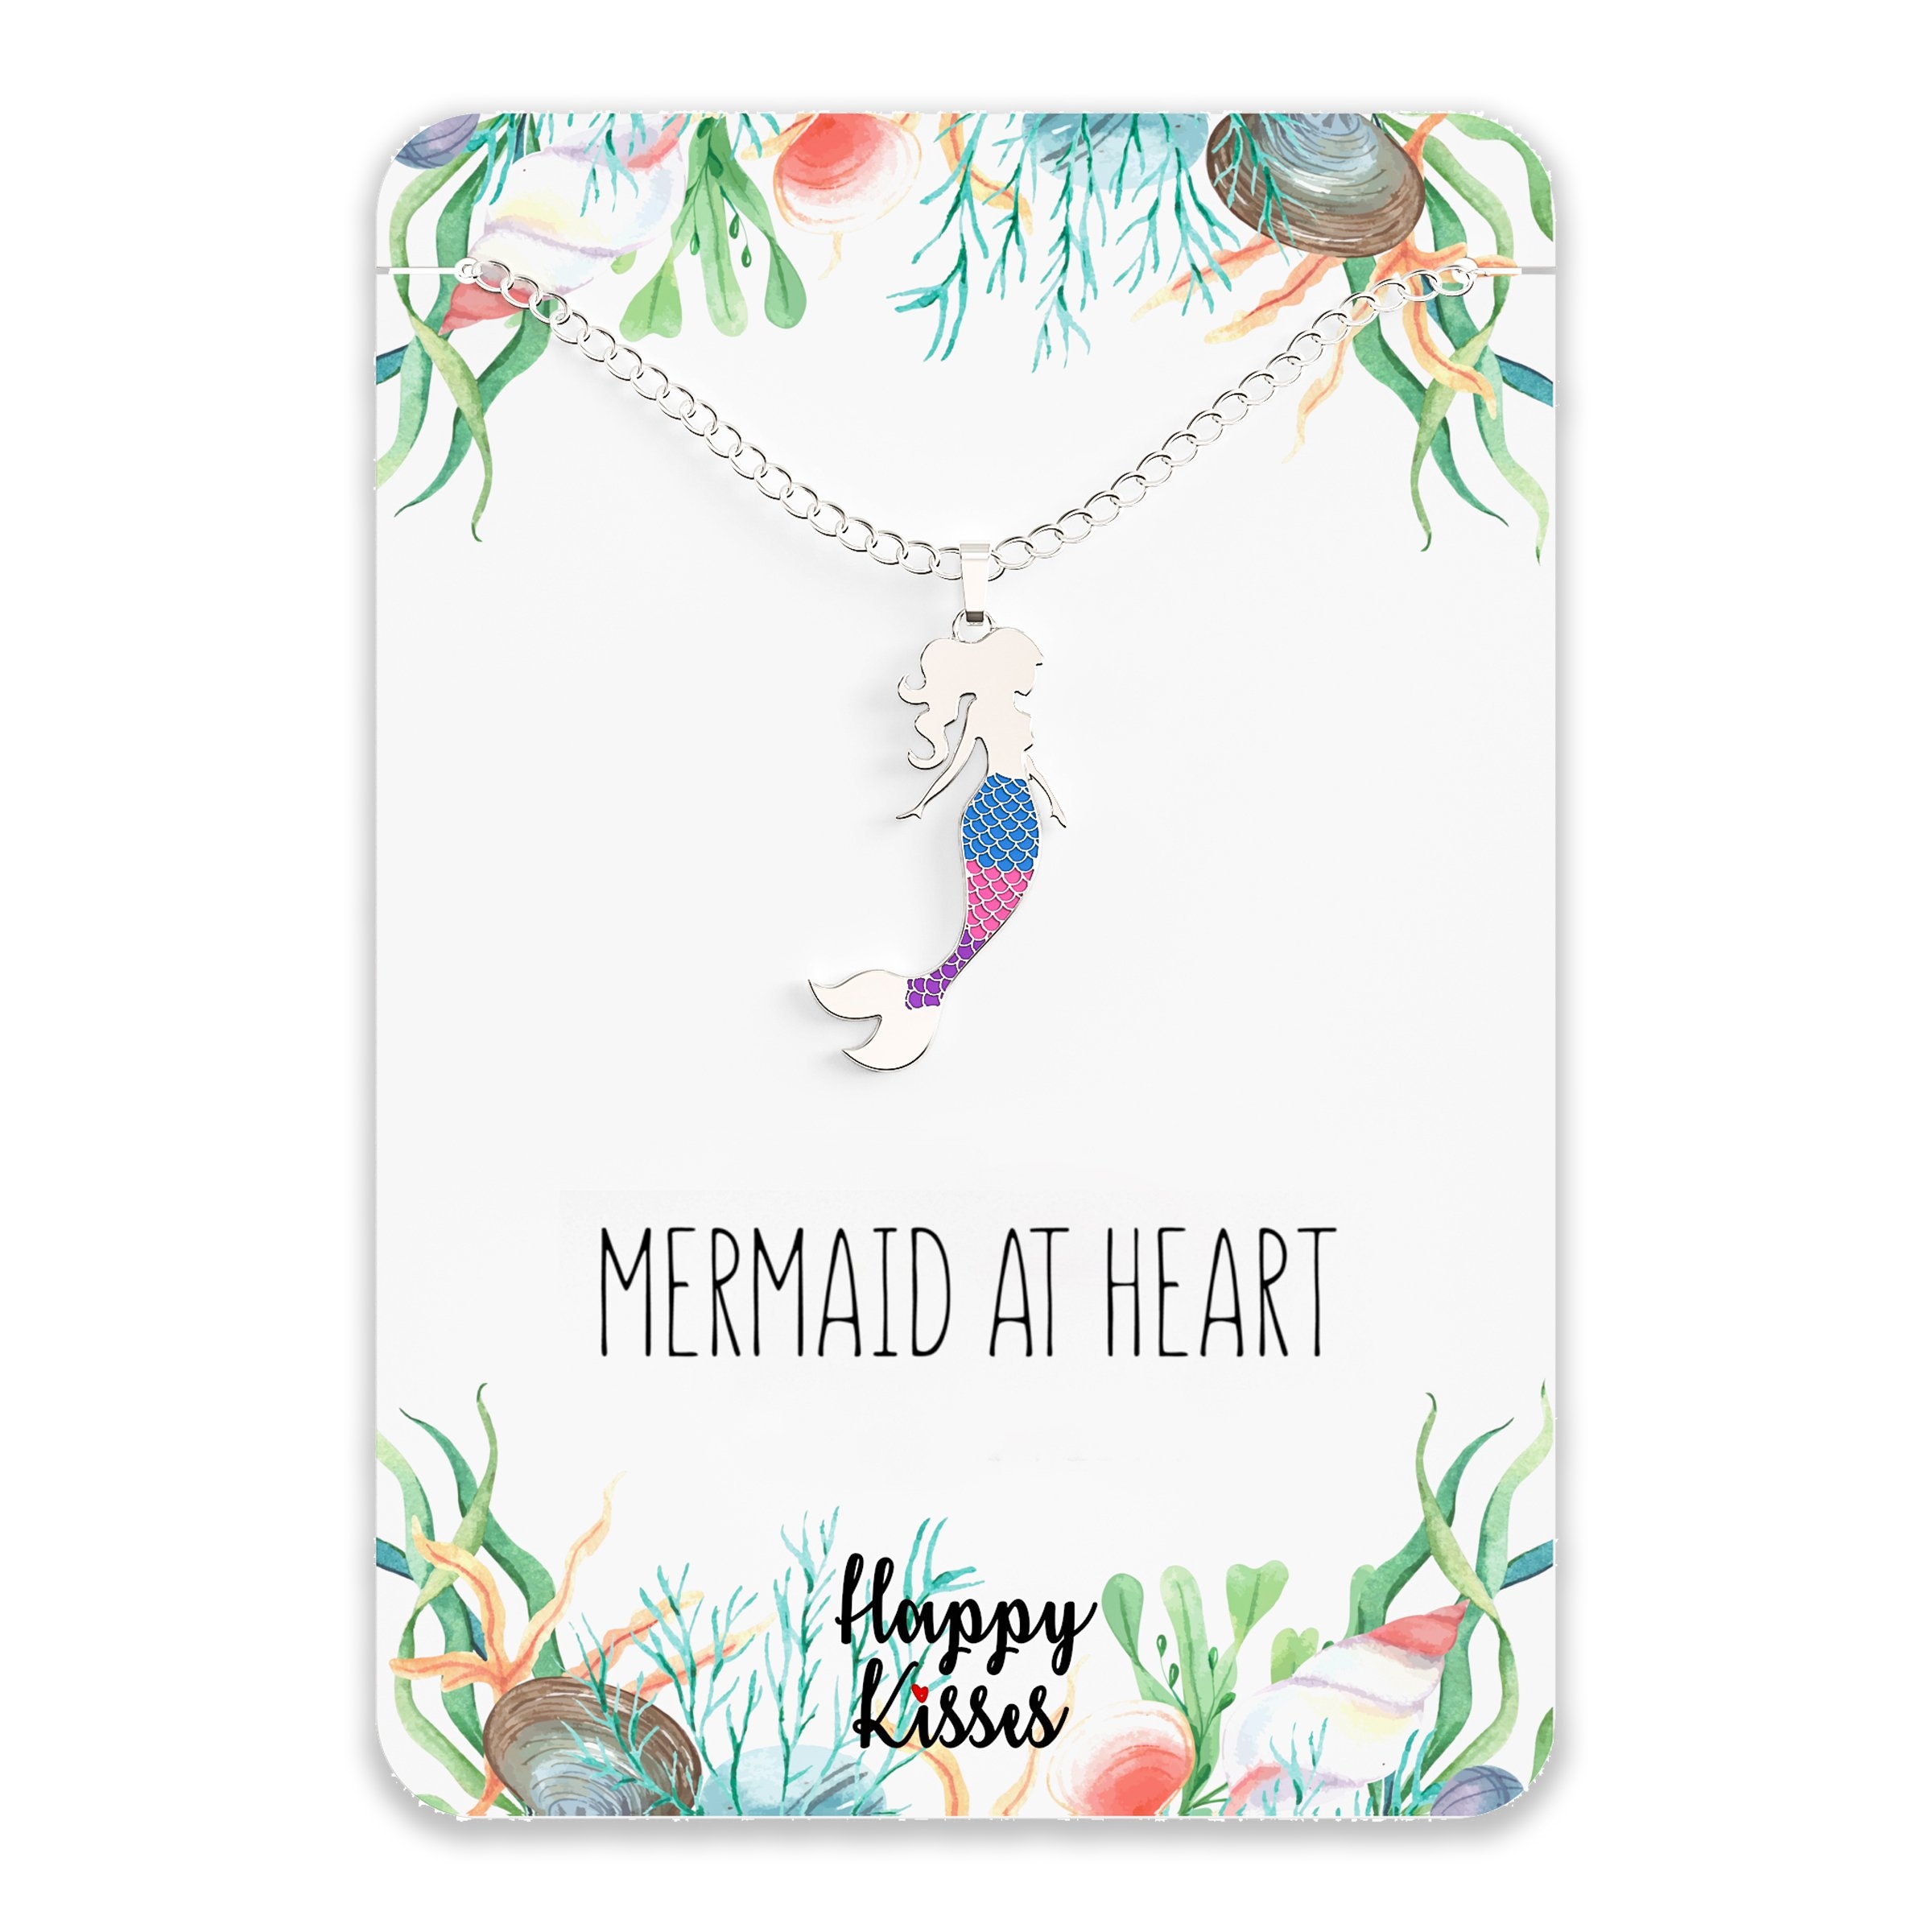 Mermaid Necklace – Cute Mermaid Gift – “Mermaid at Heart” Message Card – Happy Kisses